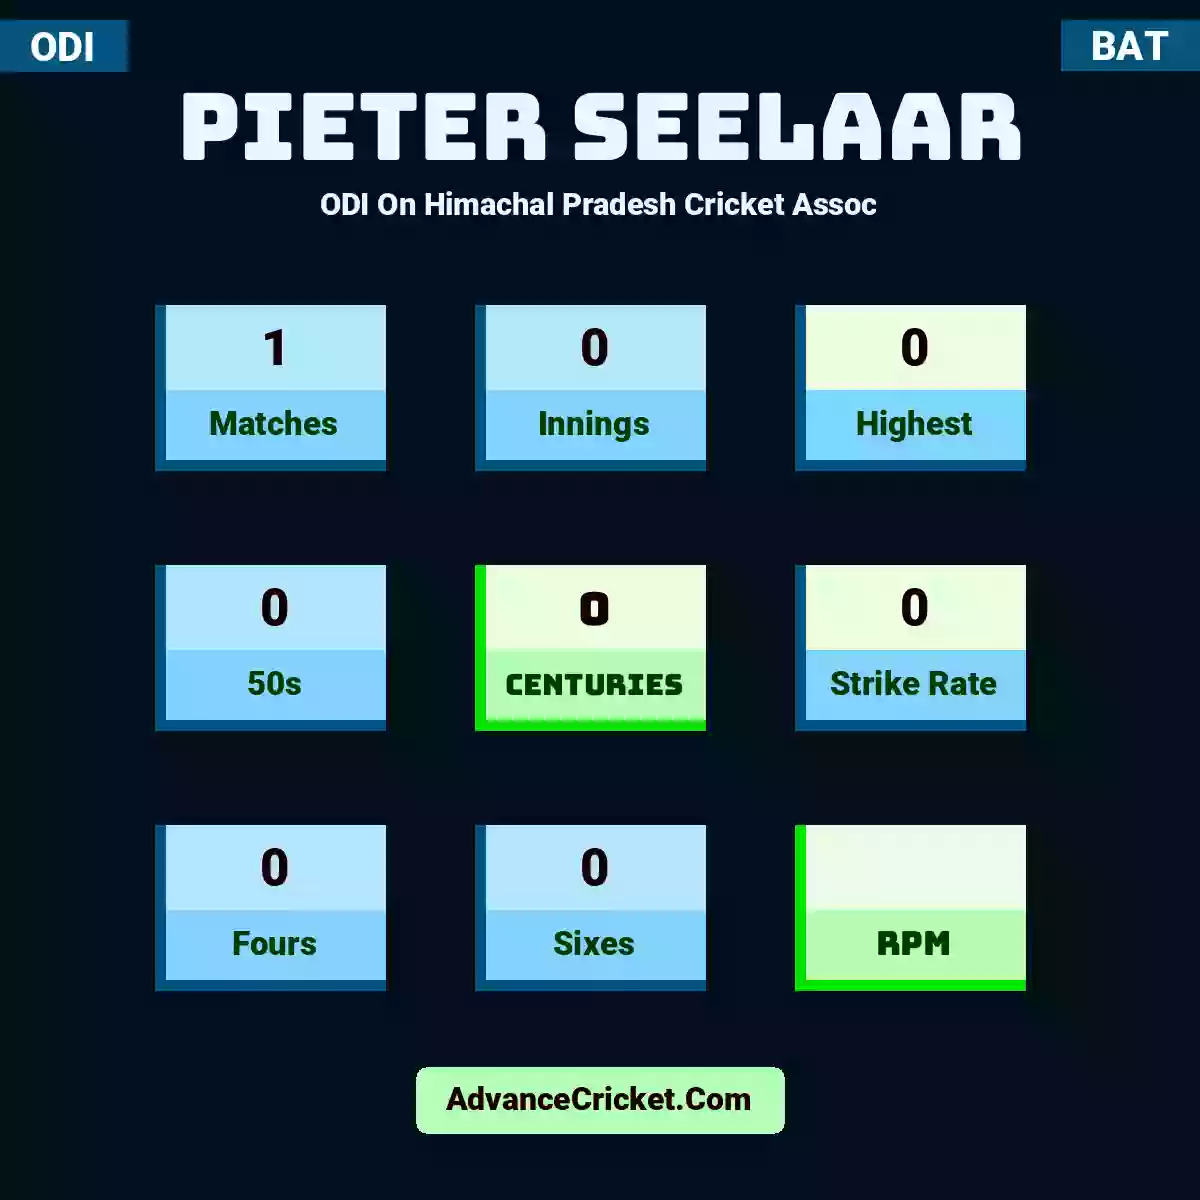 Pieter Seelaar ODI  On Himachal Pradesh Cricket Assoc, Pieter Seelaar played 1 matches, scored 0 runs as highest, 0 half-centuries, and 0 centuries, with a strike rate of 0. P.Seelaar hit 0 fours and 0 sixes.